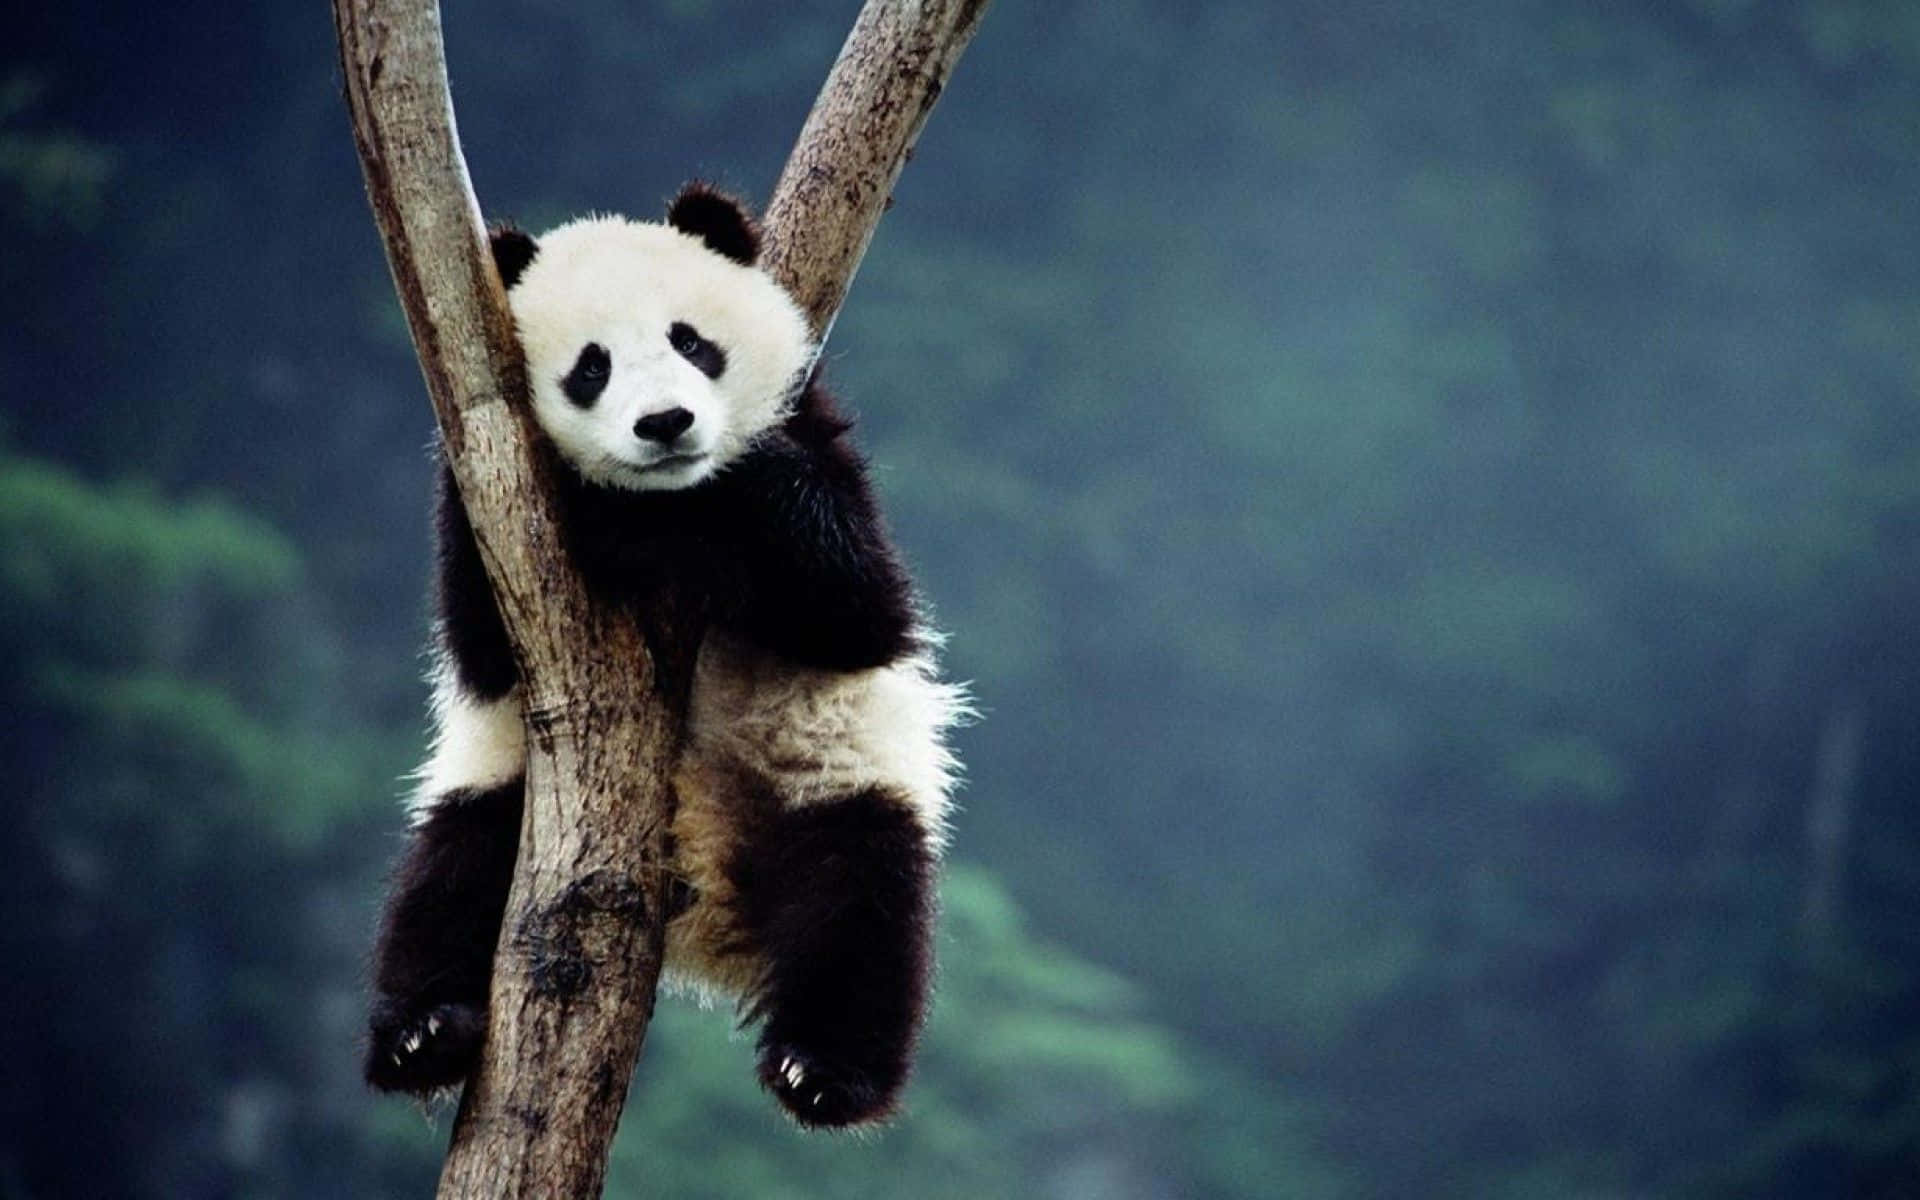 A cuddly panda dwarfing the landscape